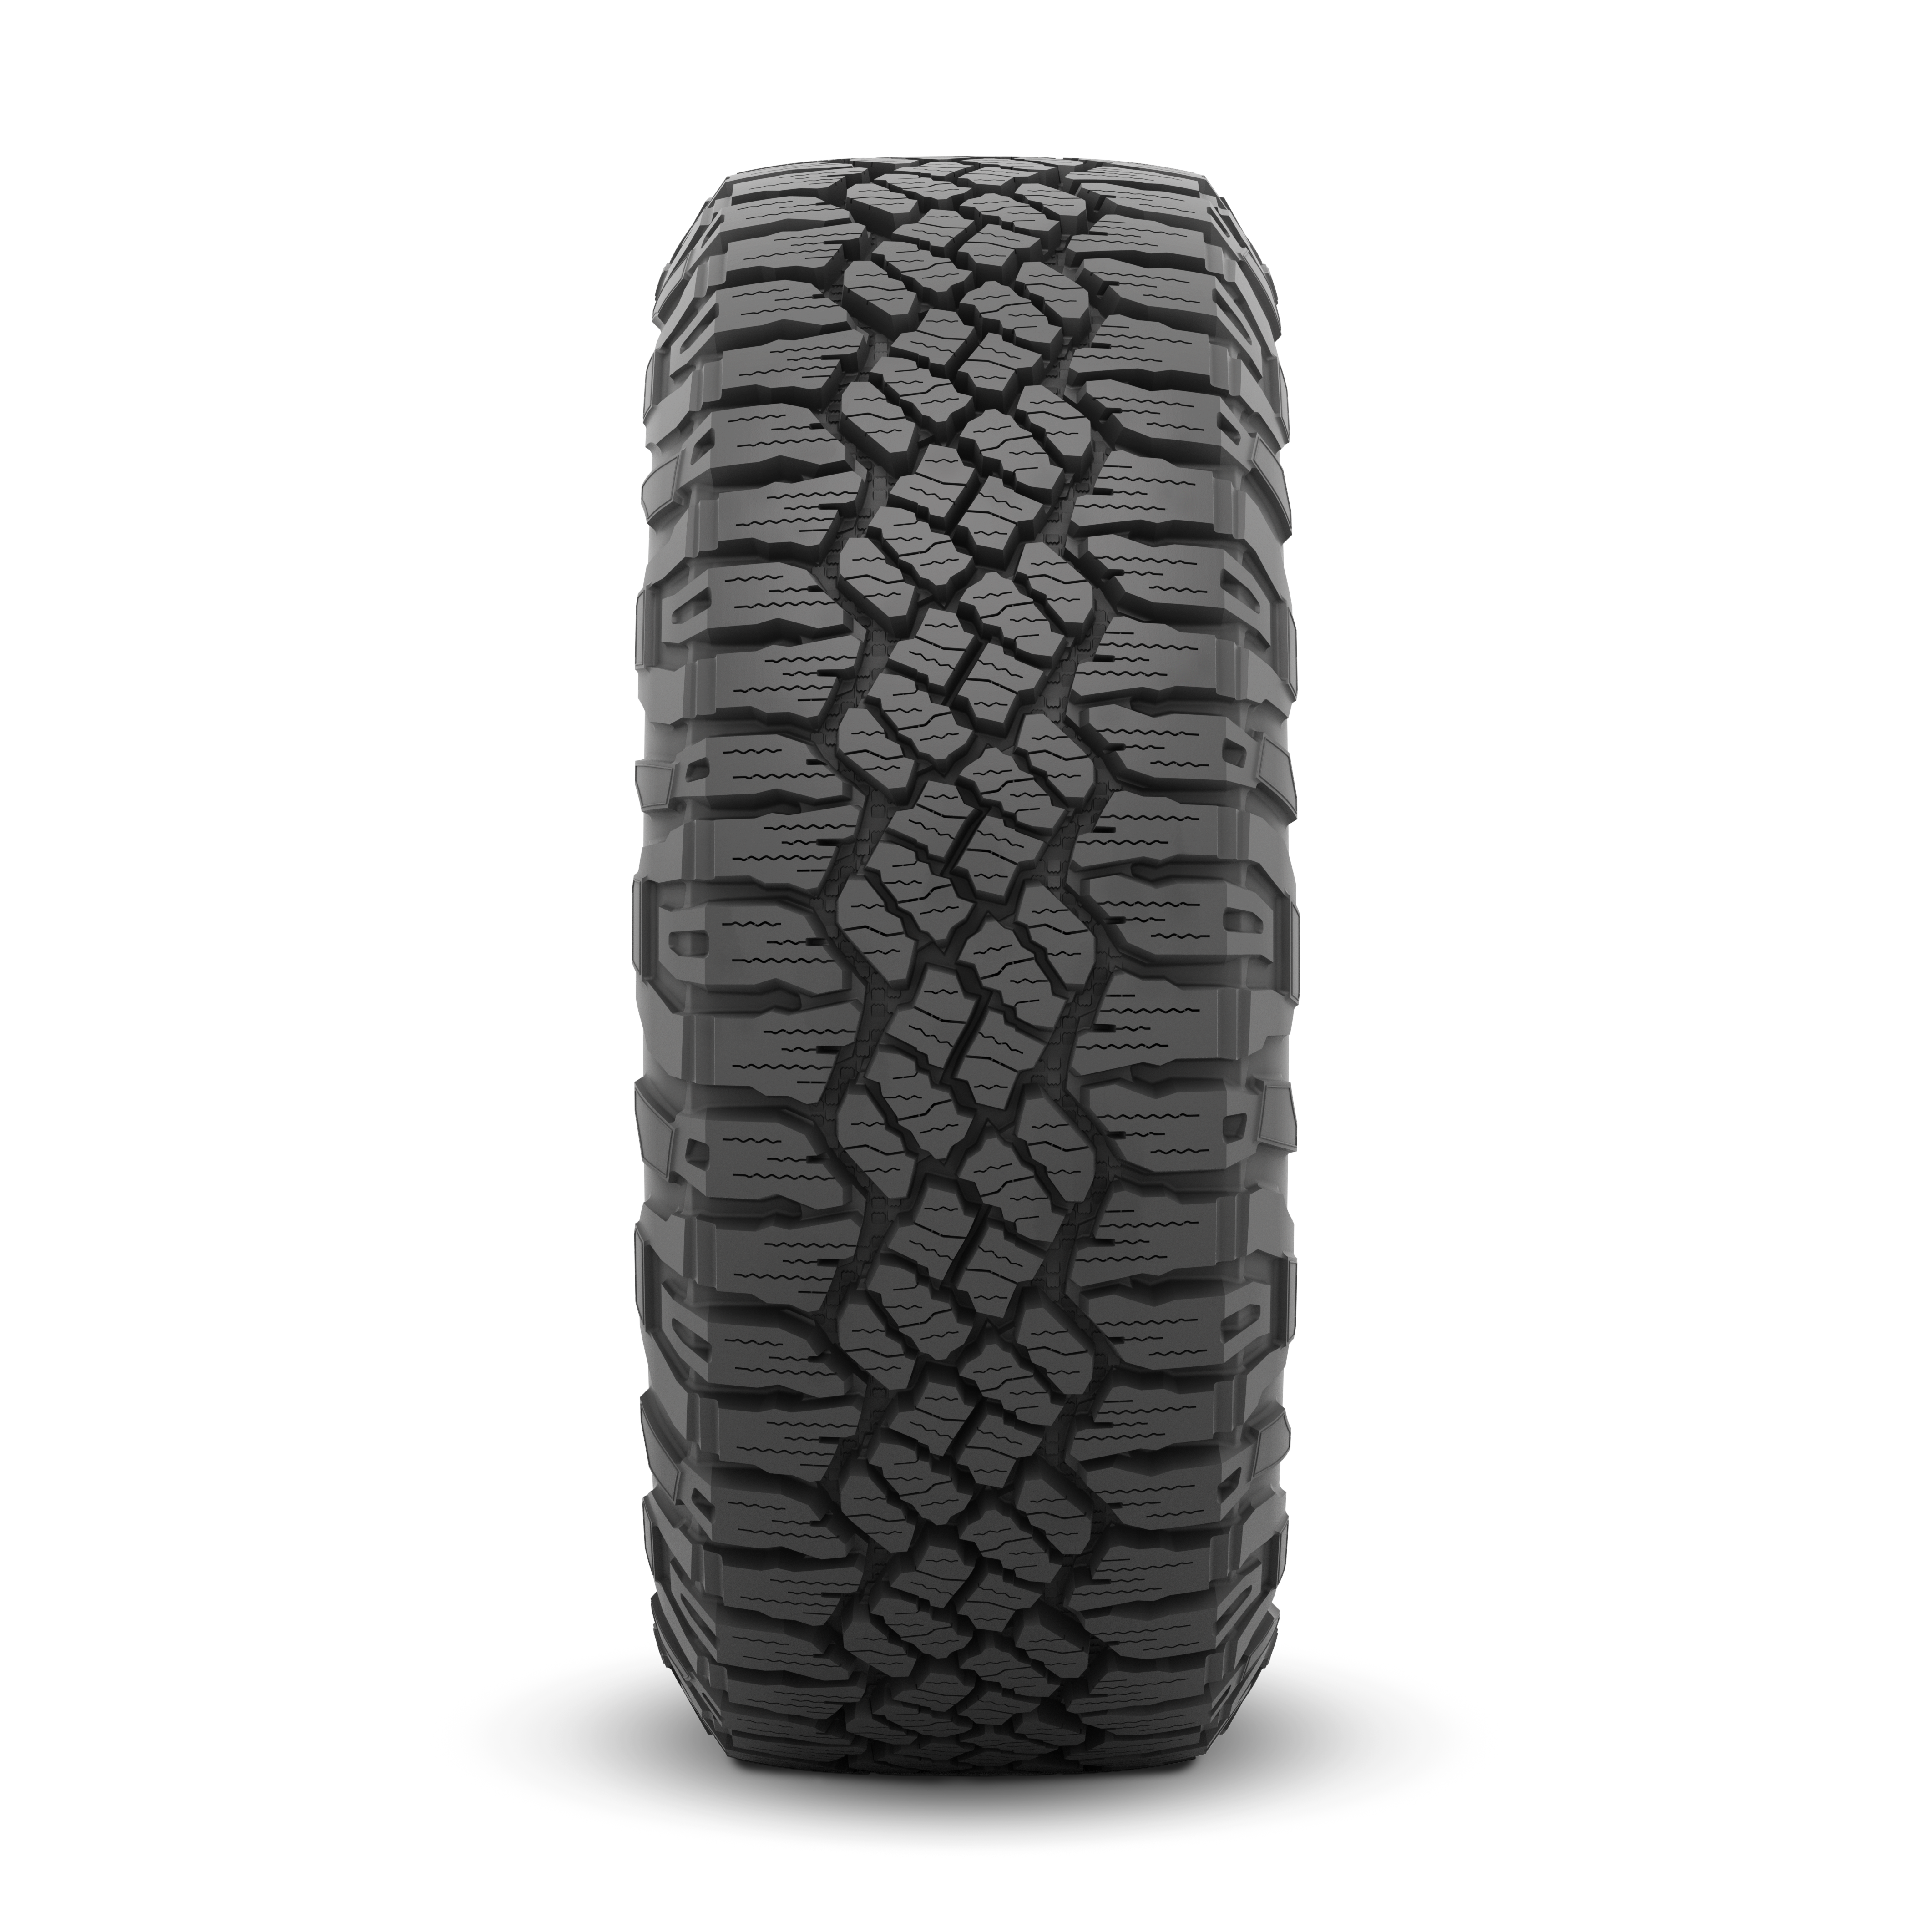 Wrangler DuraTrac® RT Tires | Goodyear Tires